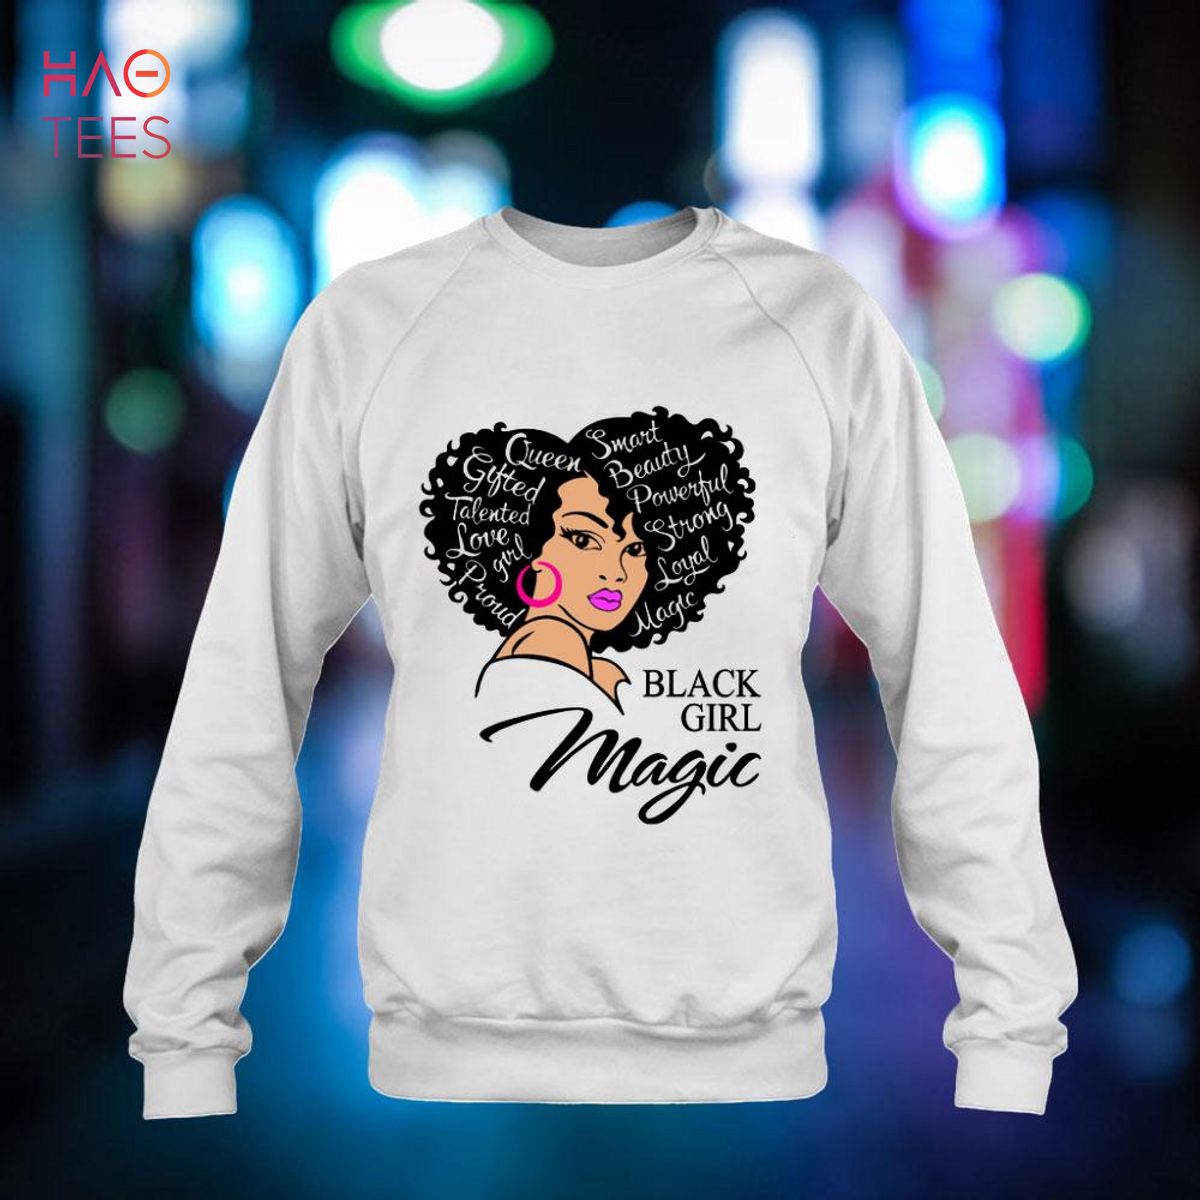 BEST Black Girl Magic shirt